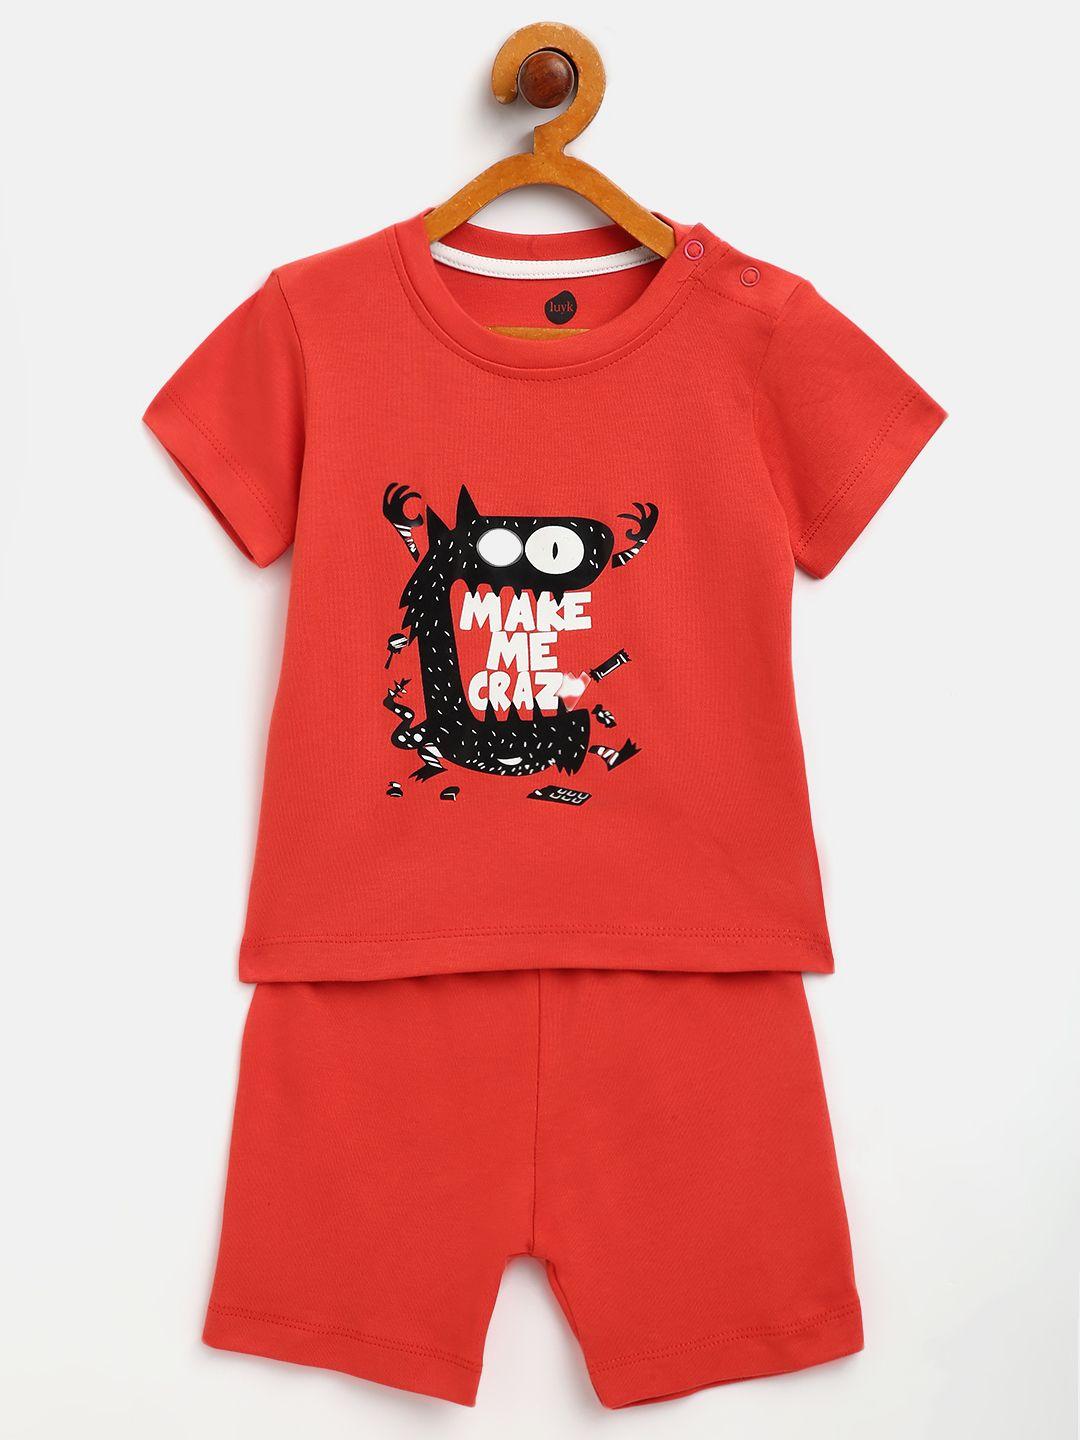 luyk unisex kids red & black pure cotton printed clothing set